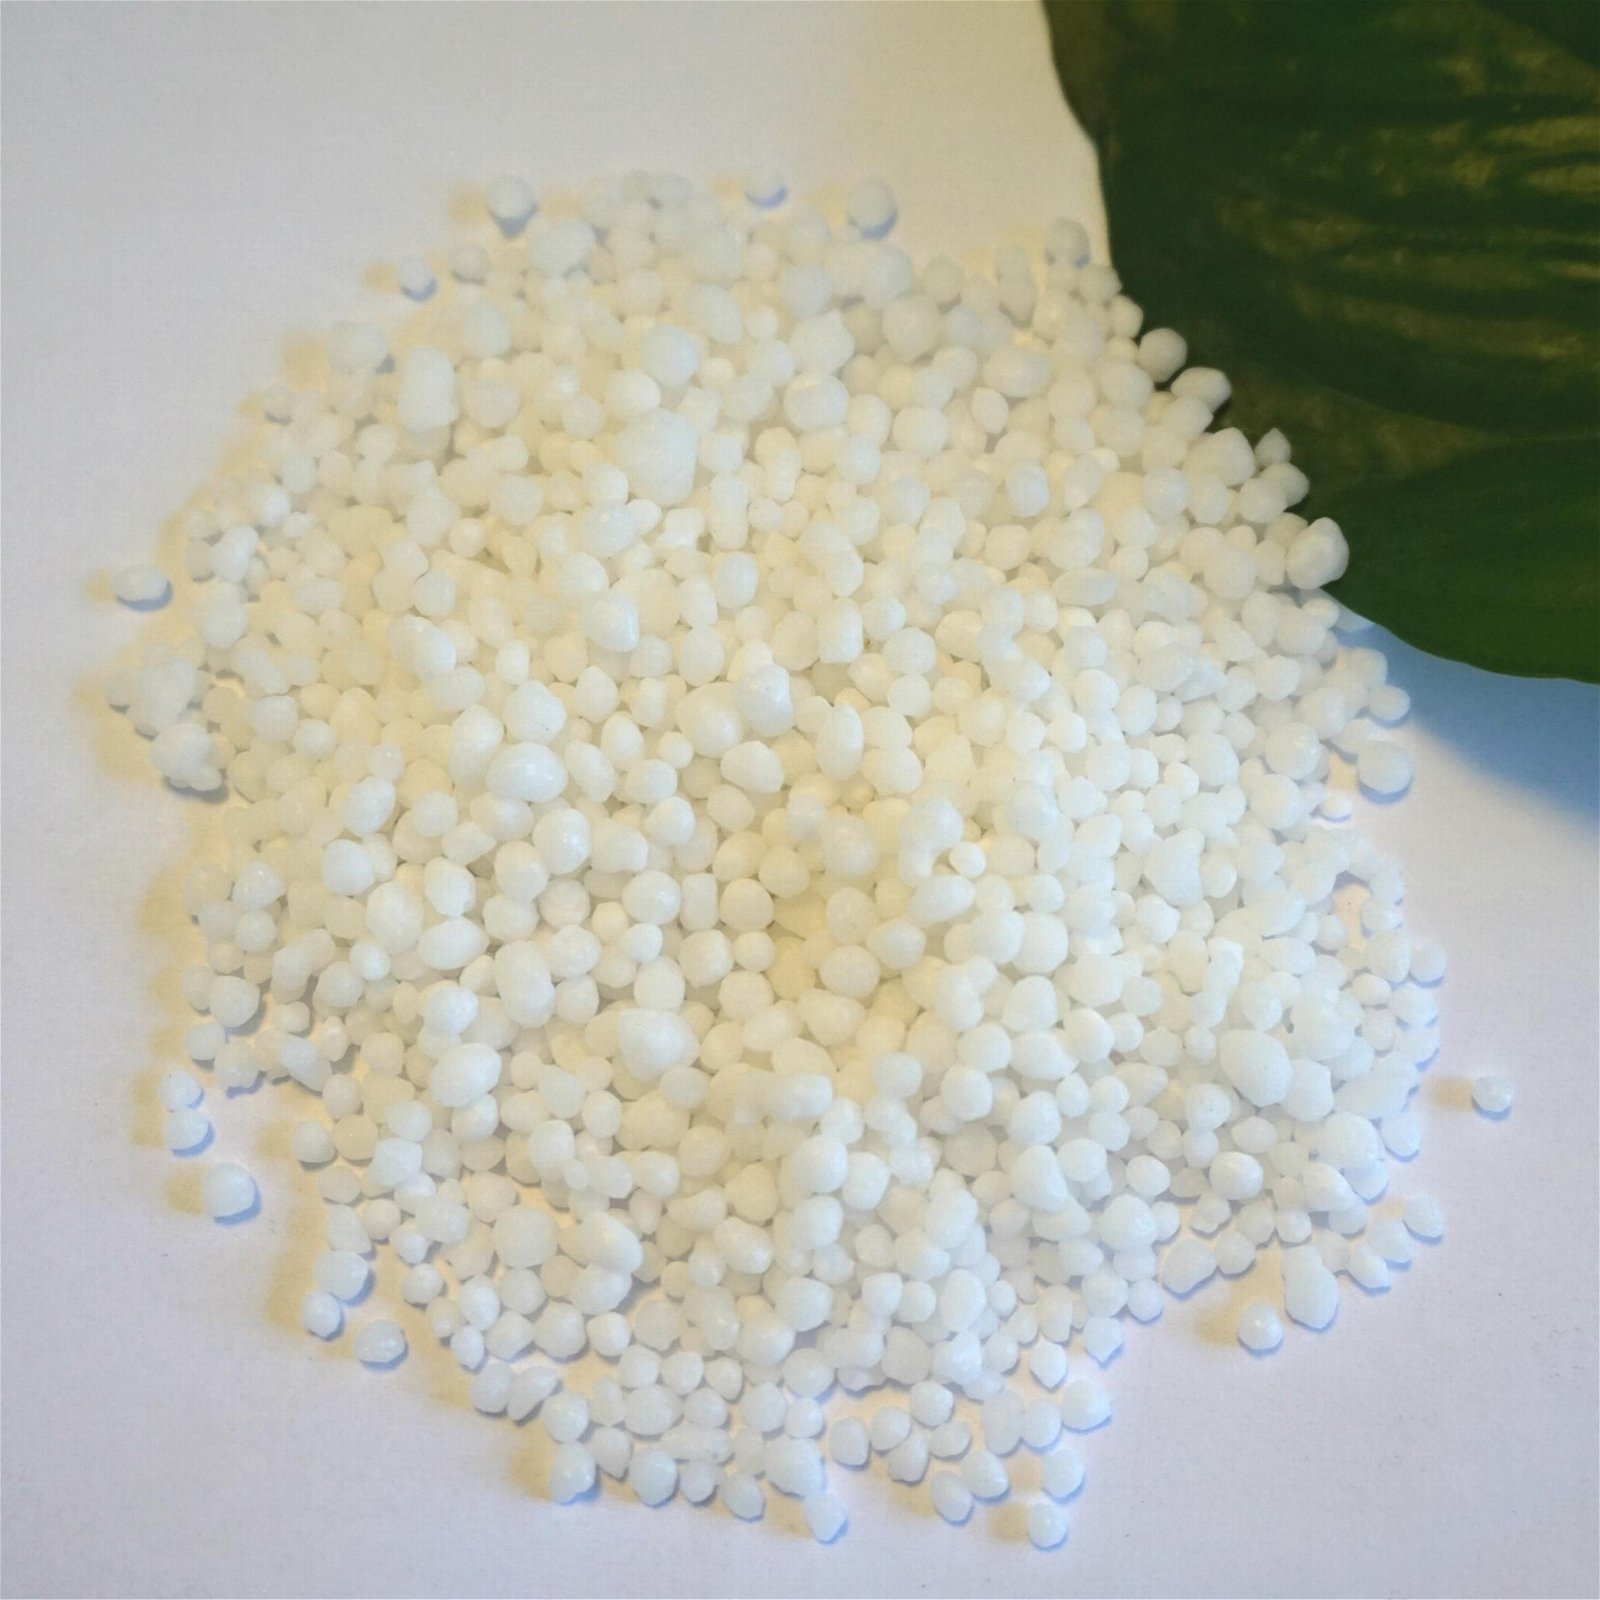 Calcium ammonium nitrate compound fertilizer 100% soluble in water 3